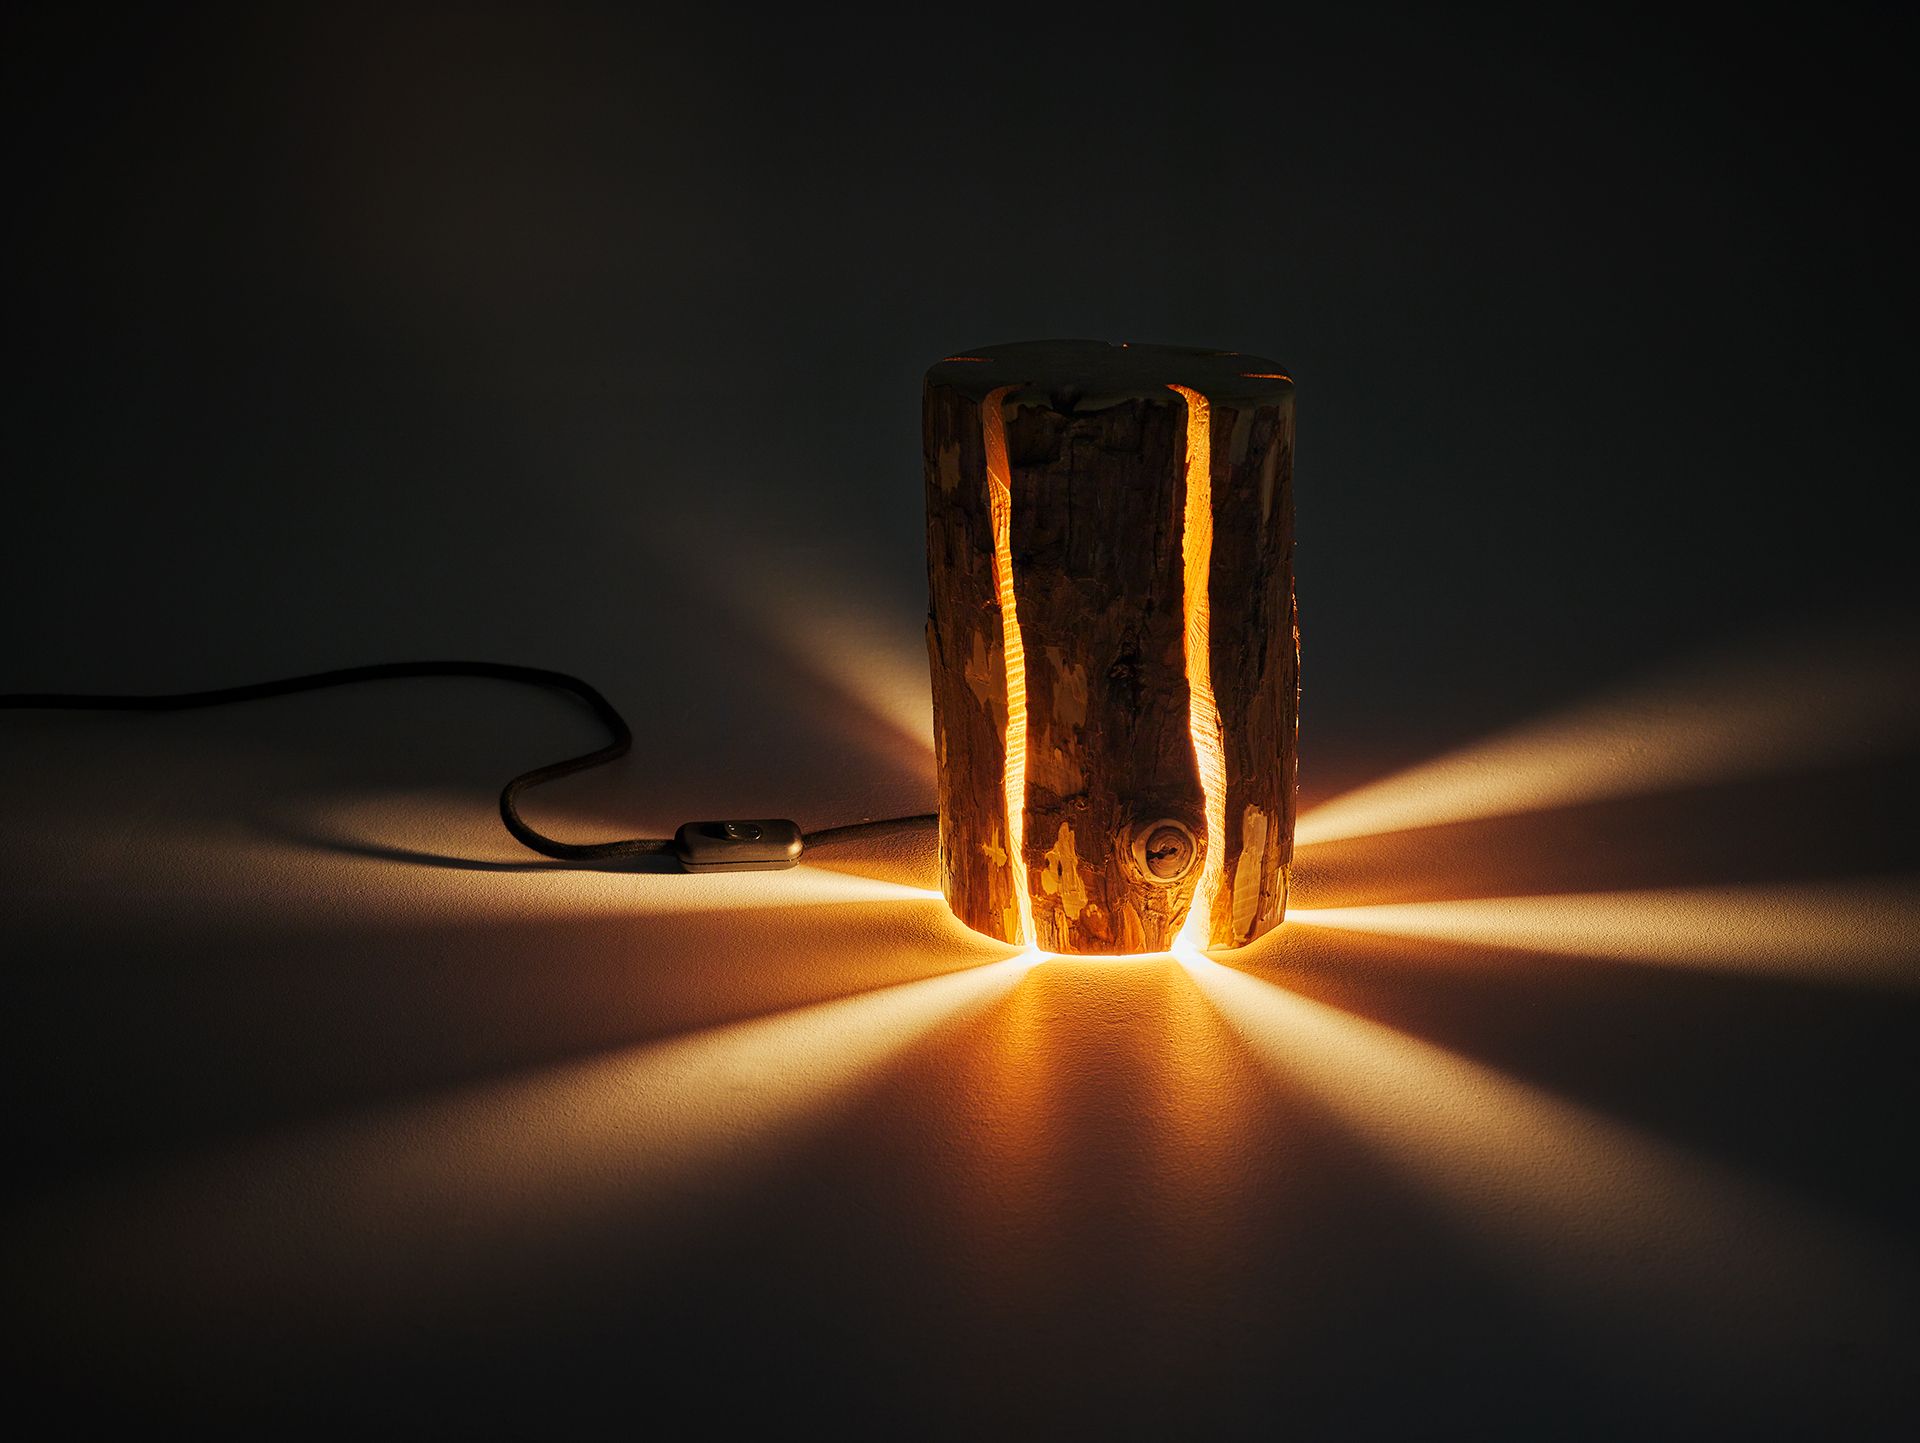 Duncan Meerding's Cracked Log Lamp showing lightplay through the cracks